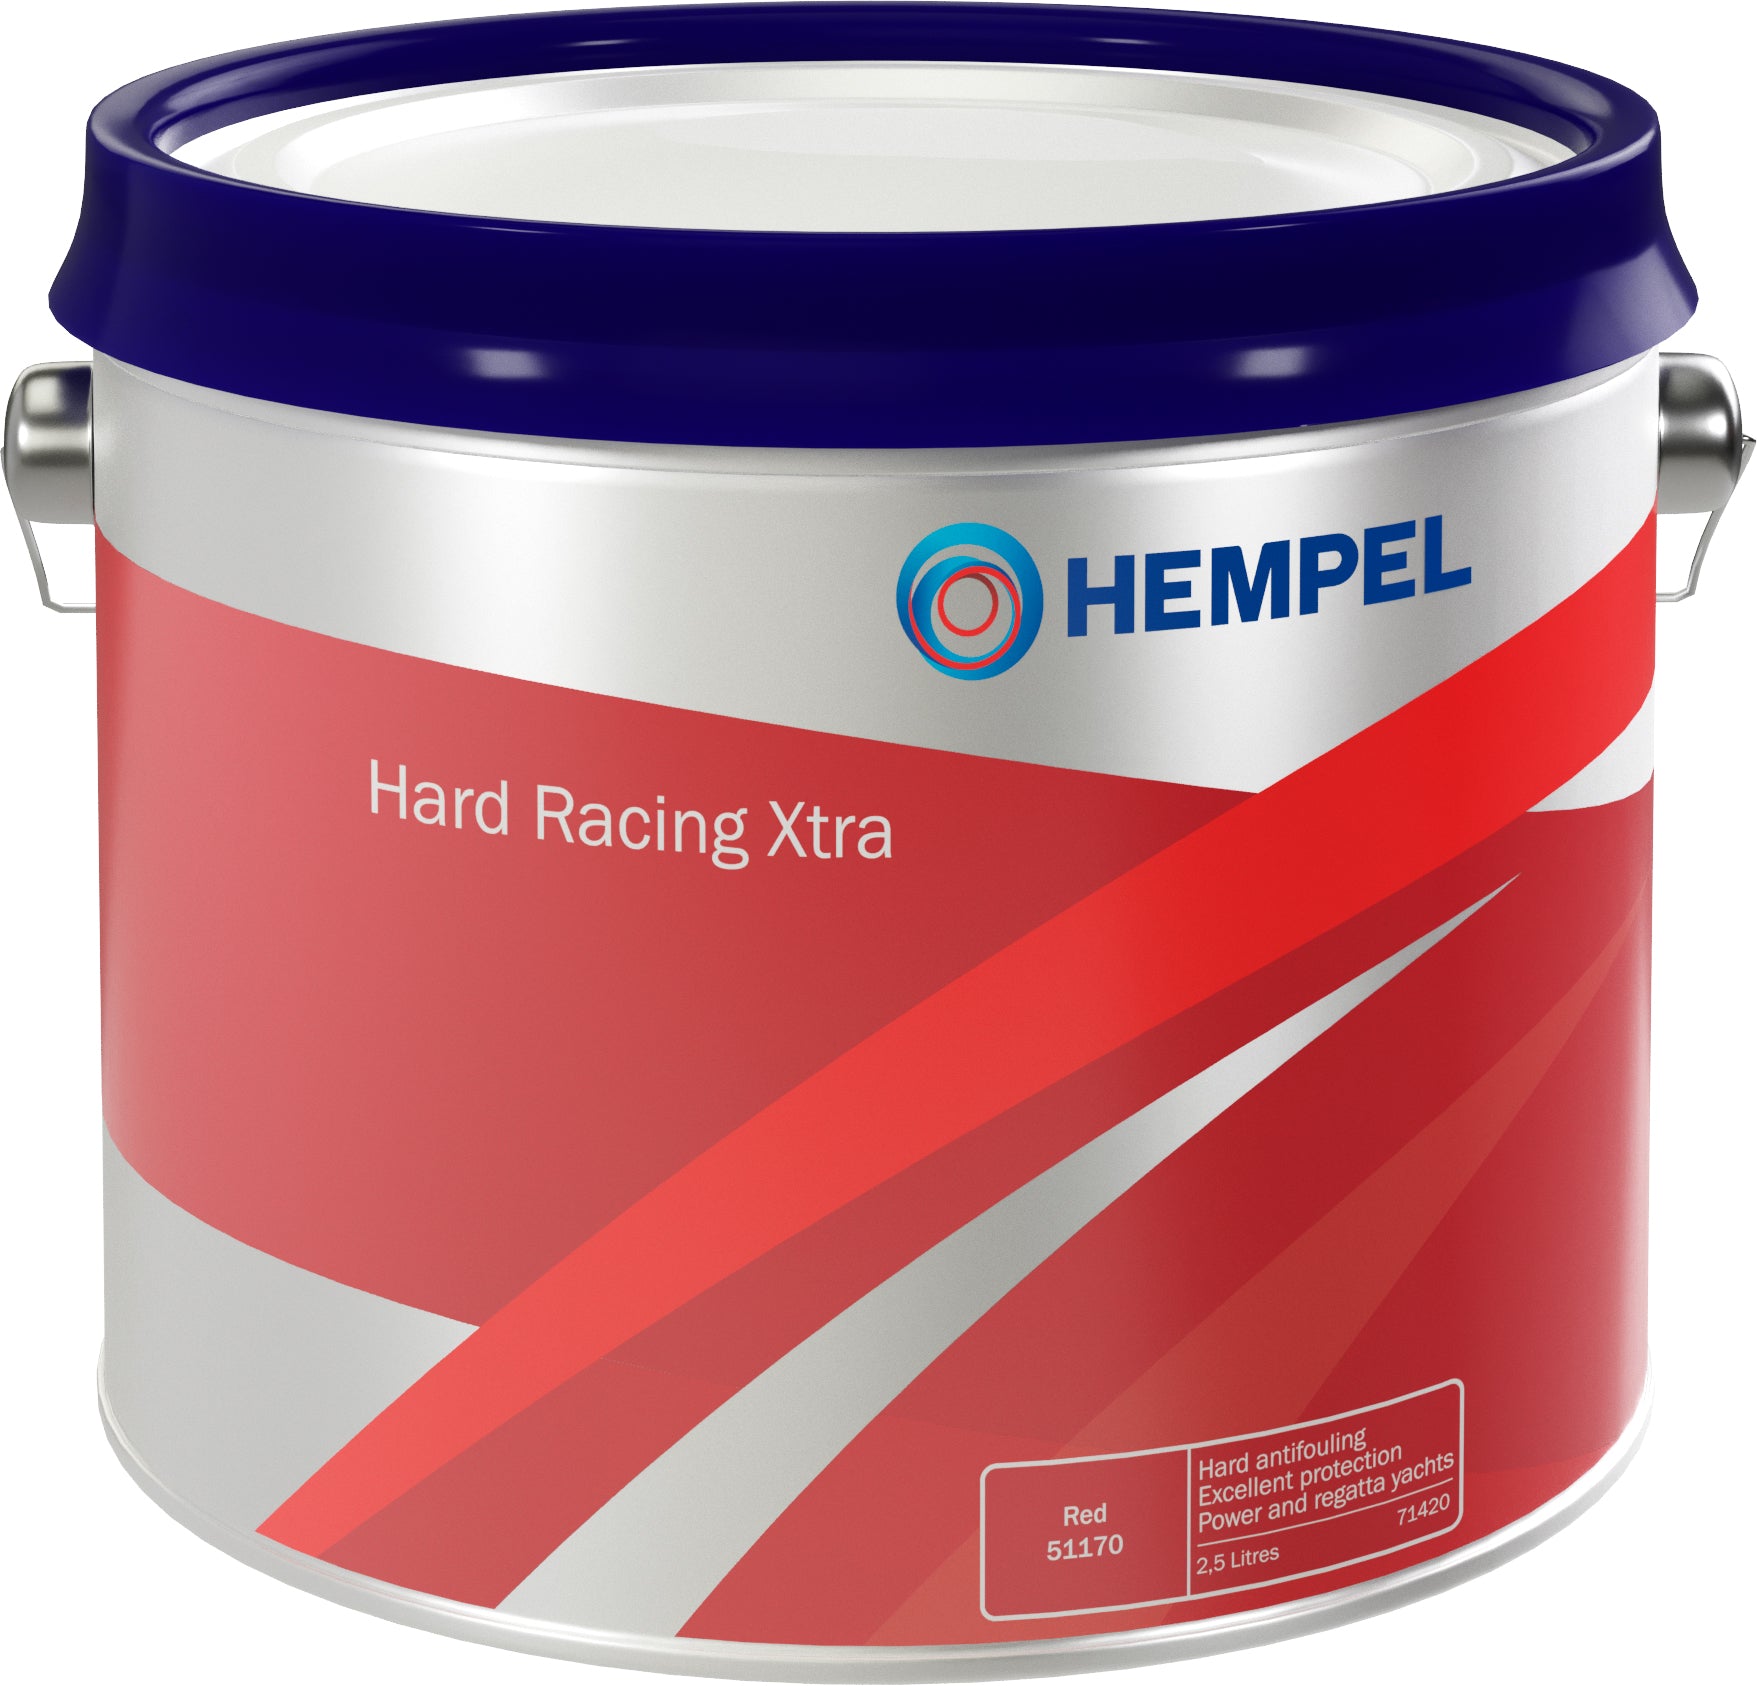 Hard Racing XTRA S. blue 31750 2.5ltr.